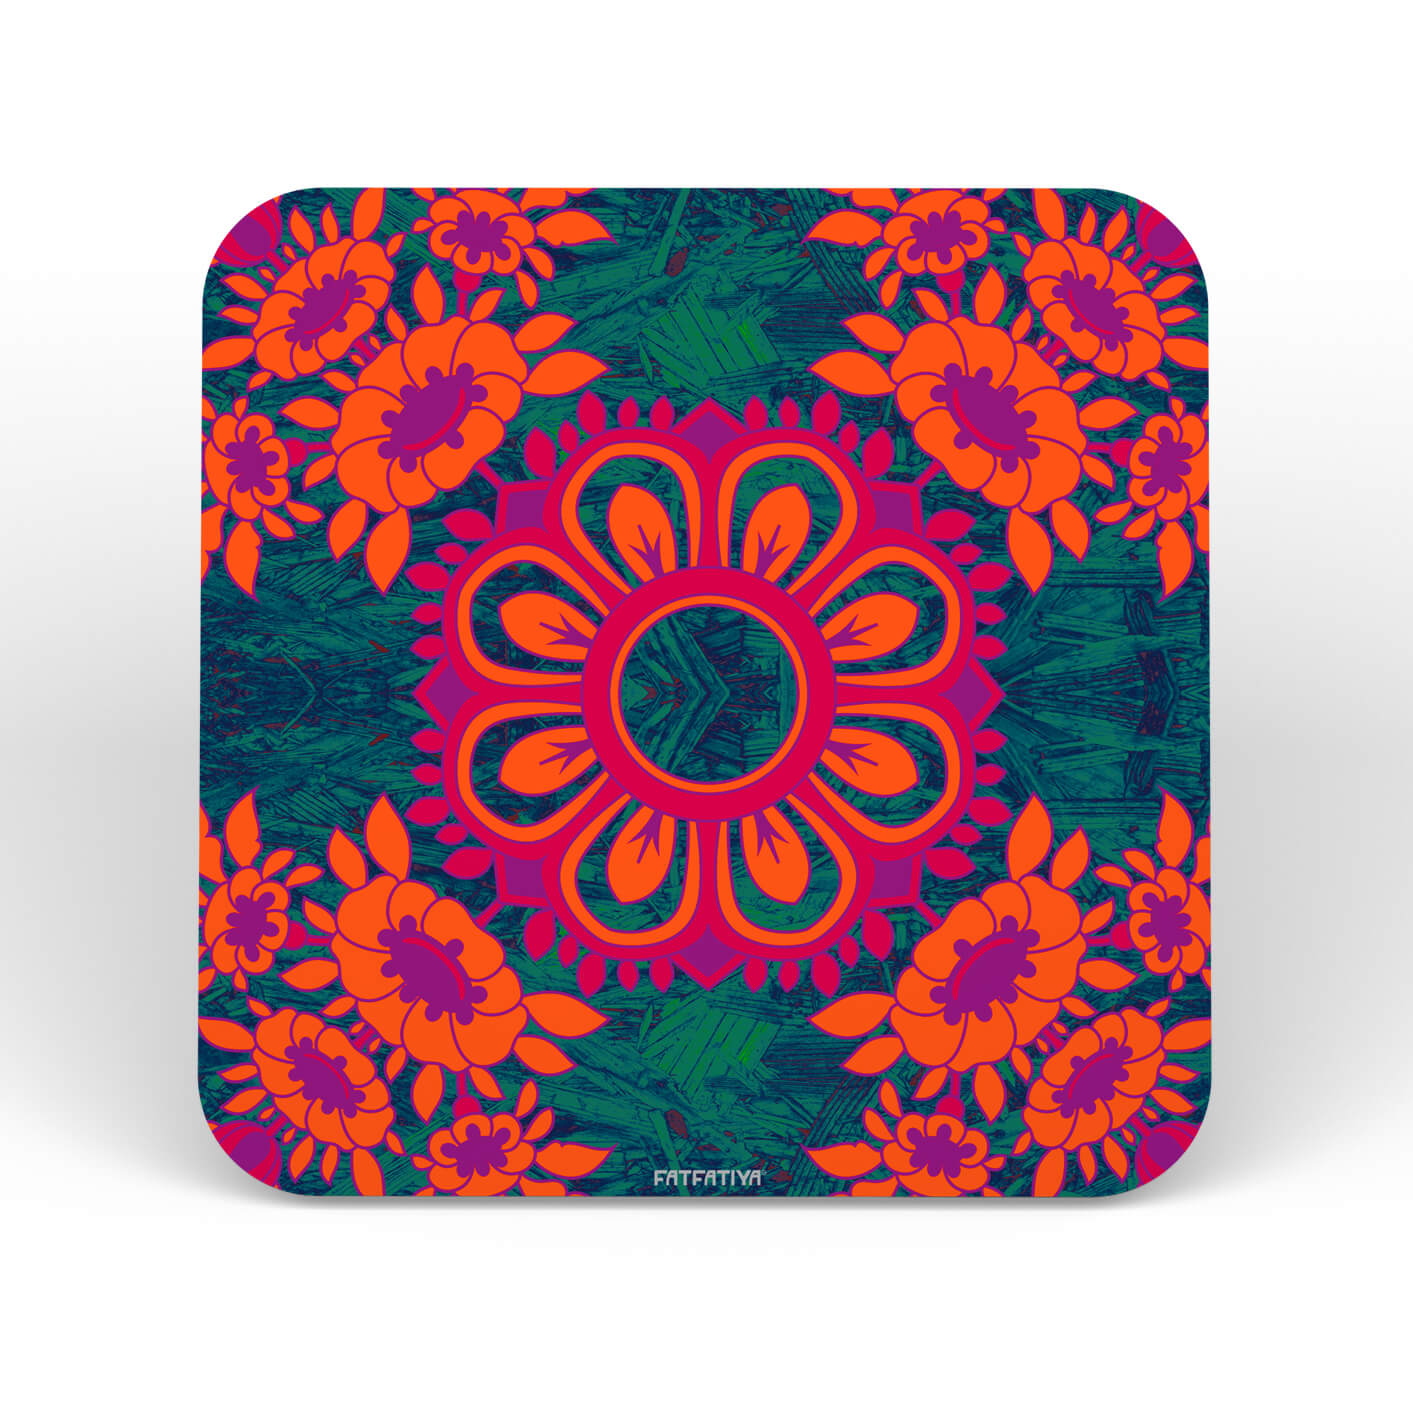 Buy Floral Motif Coasters Set Online